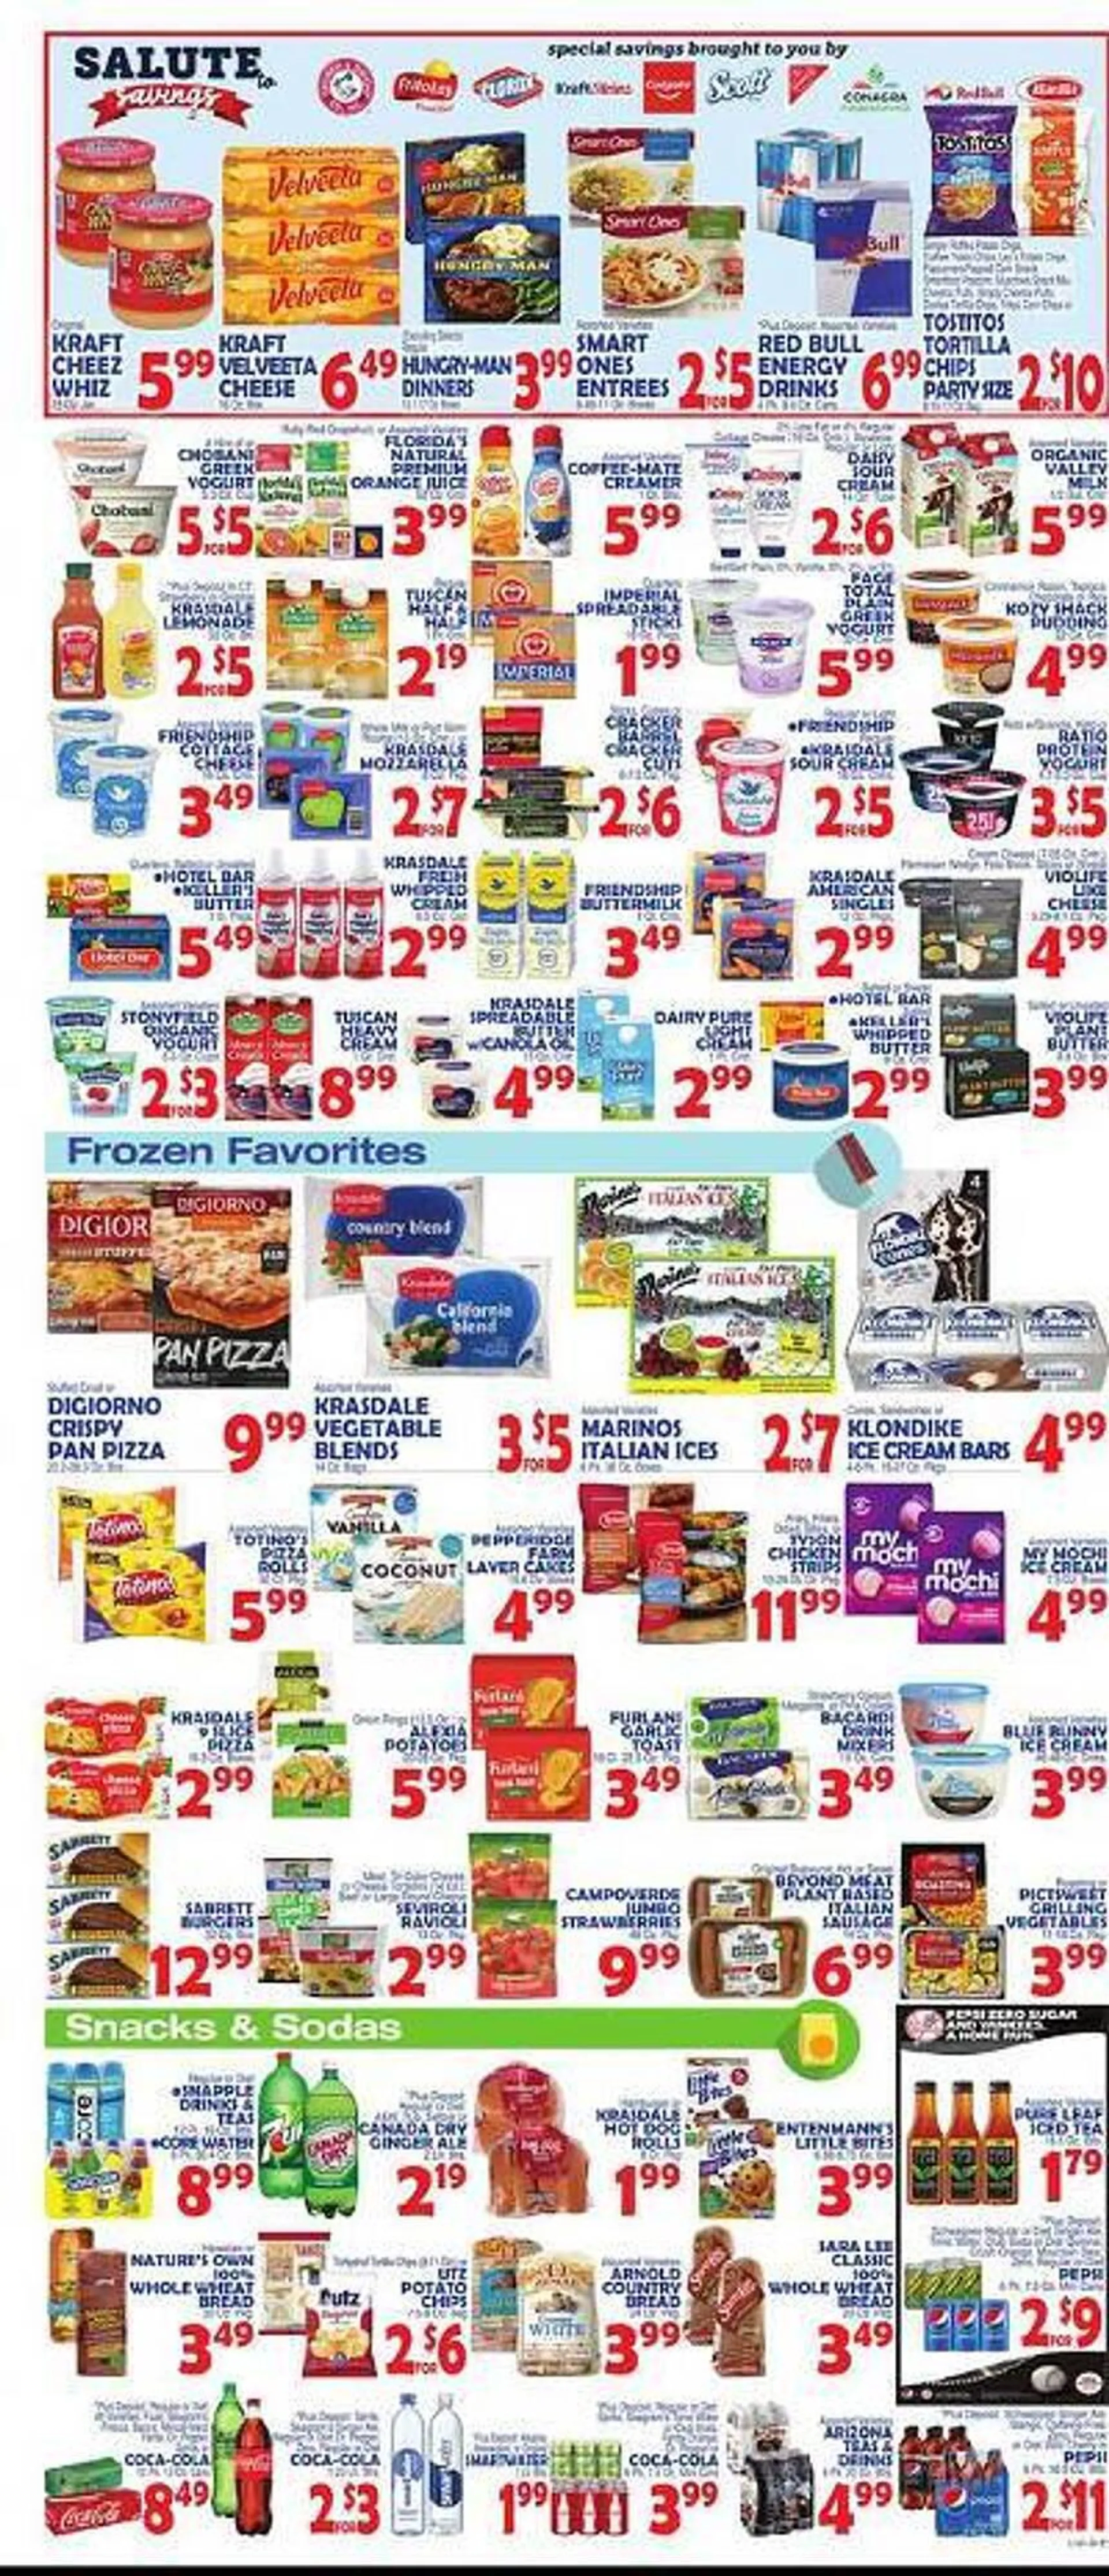 Bravo Supermarkets ad - 5